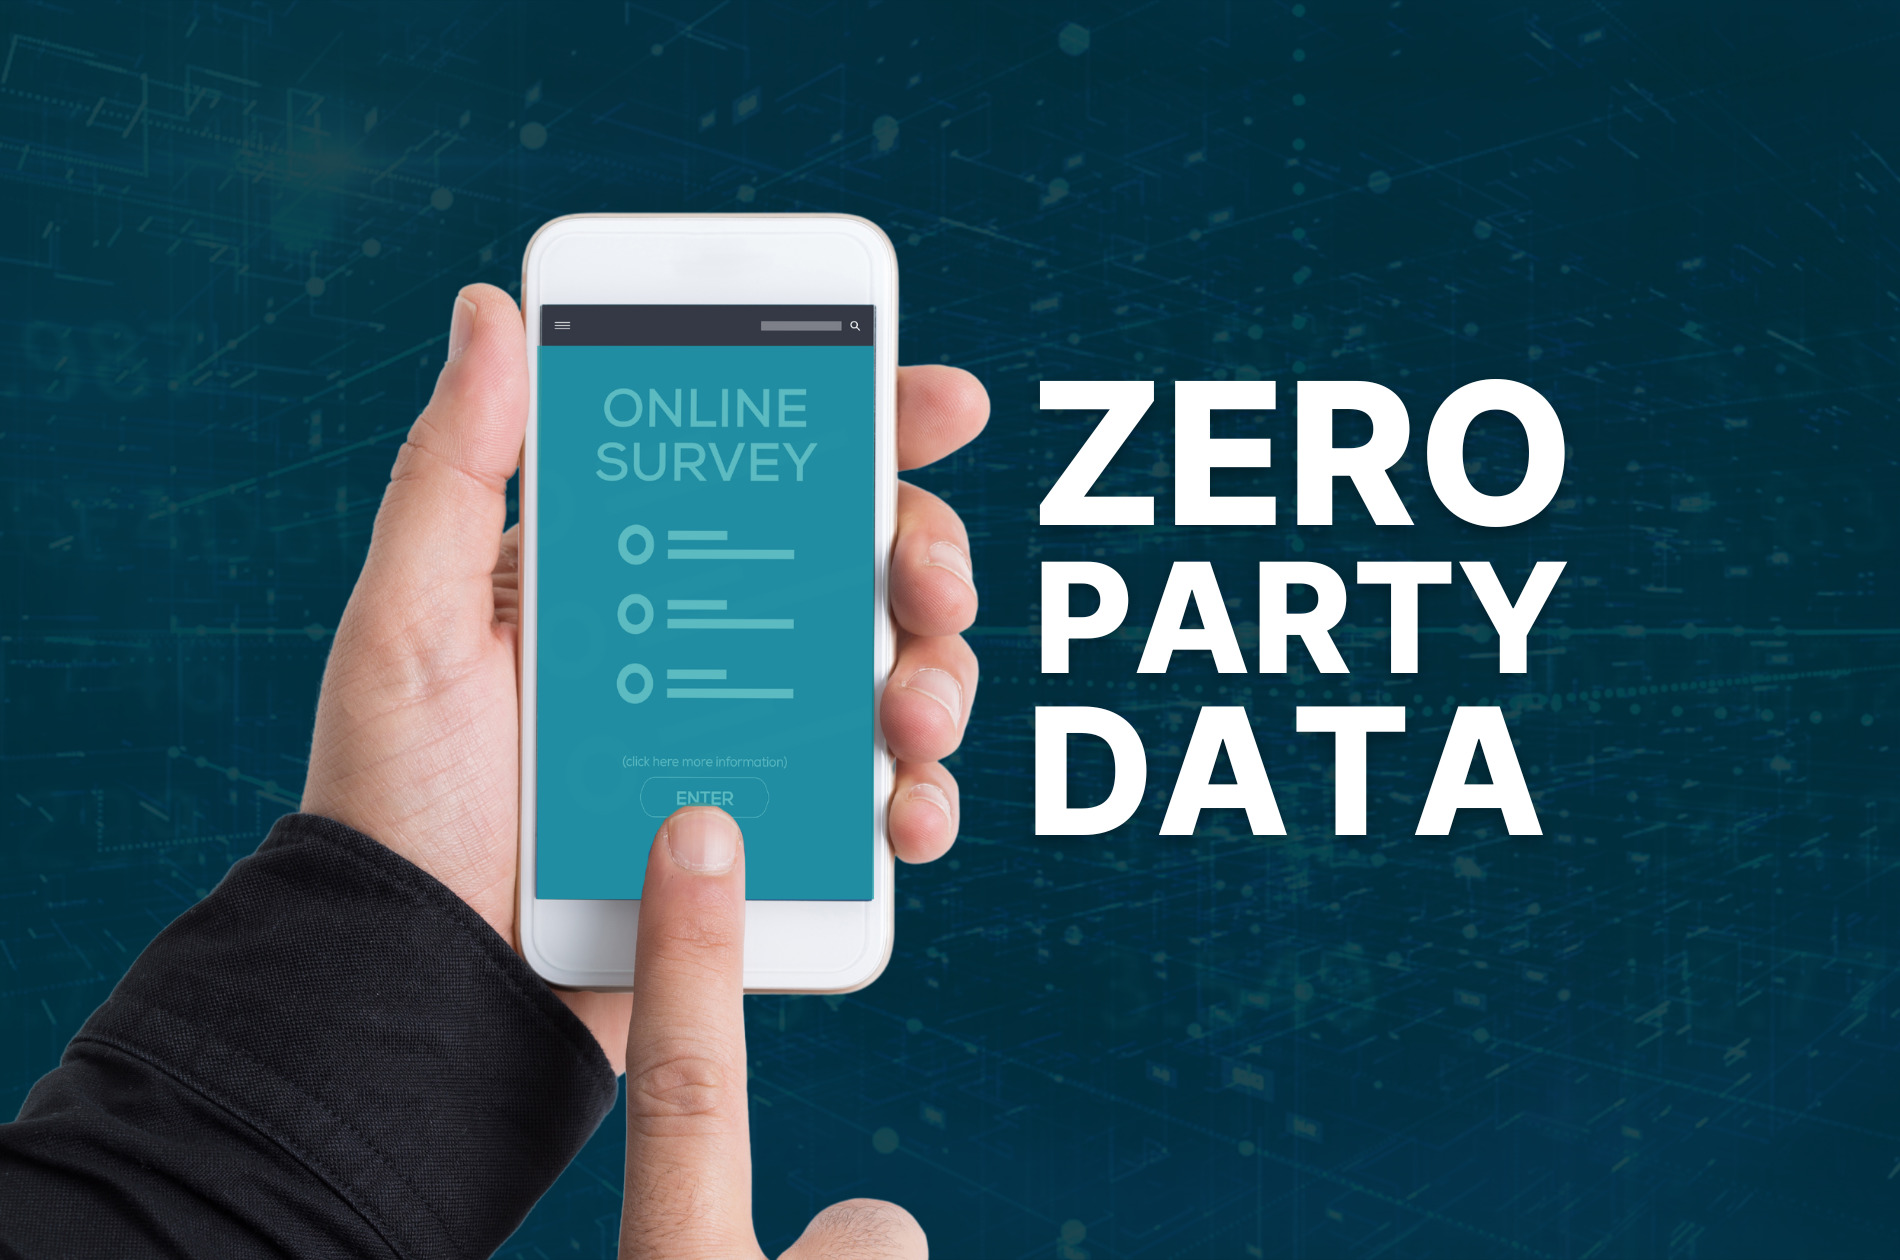 zero-party data